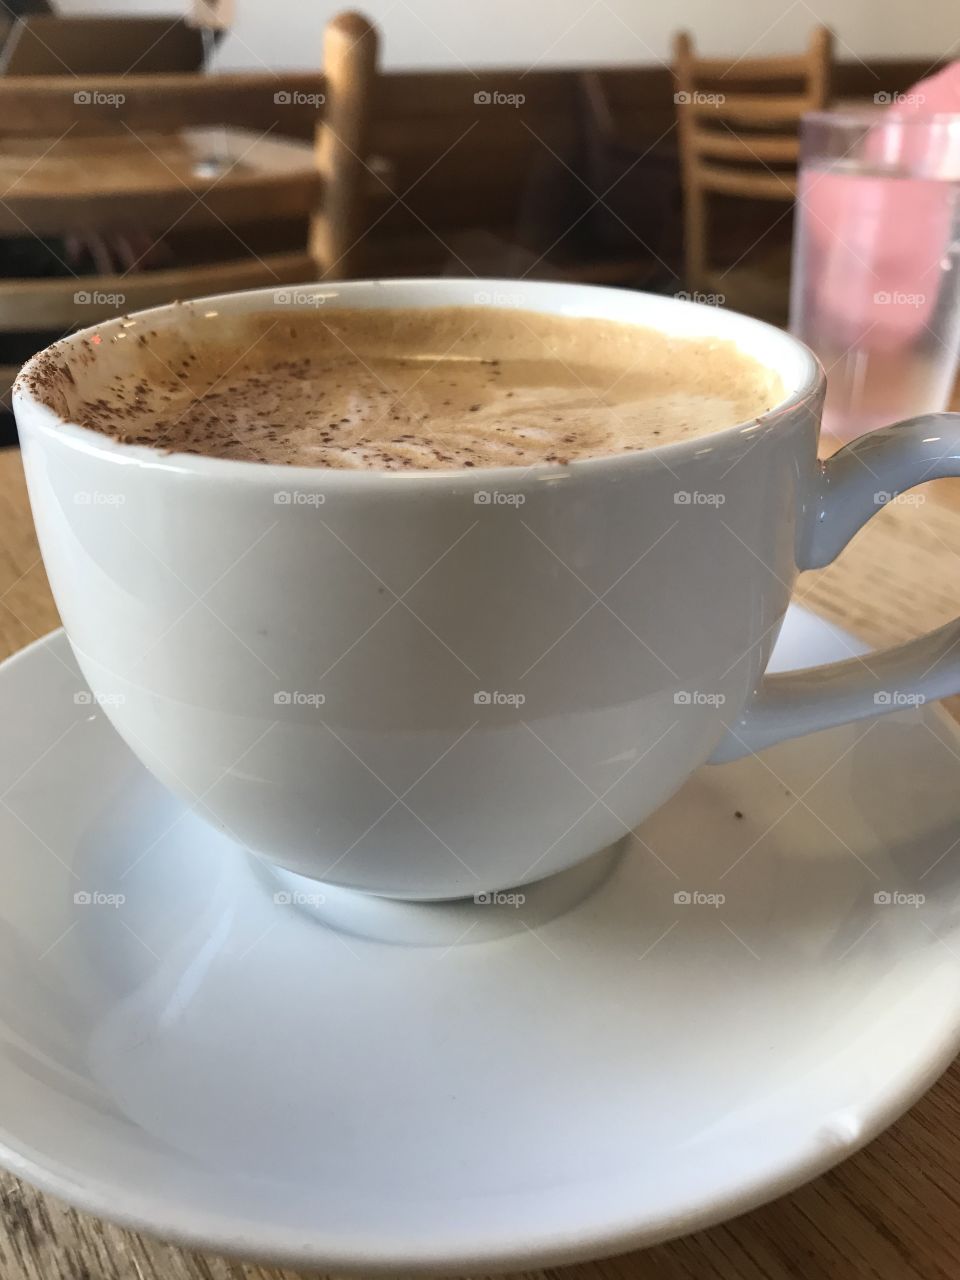 Mocha latte